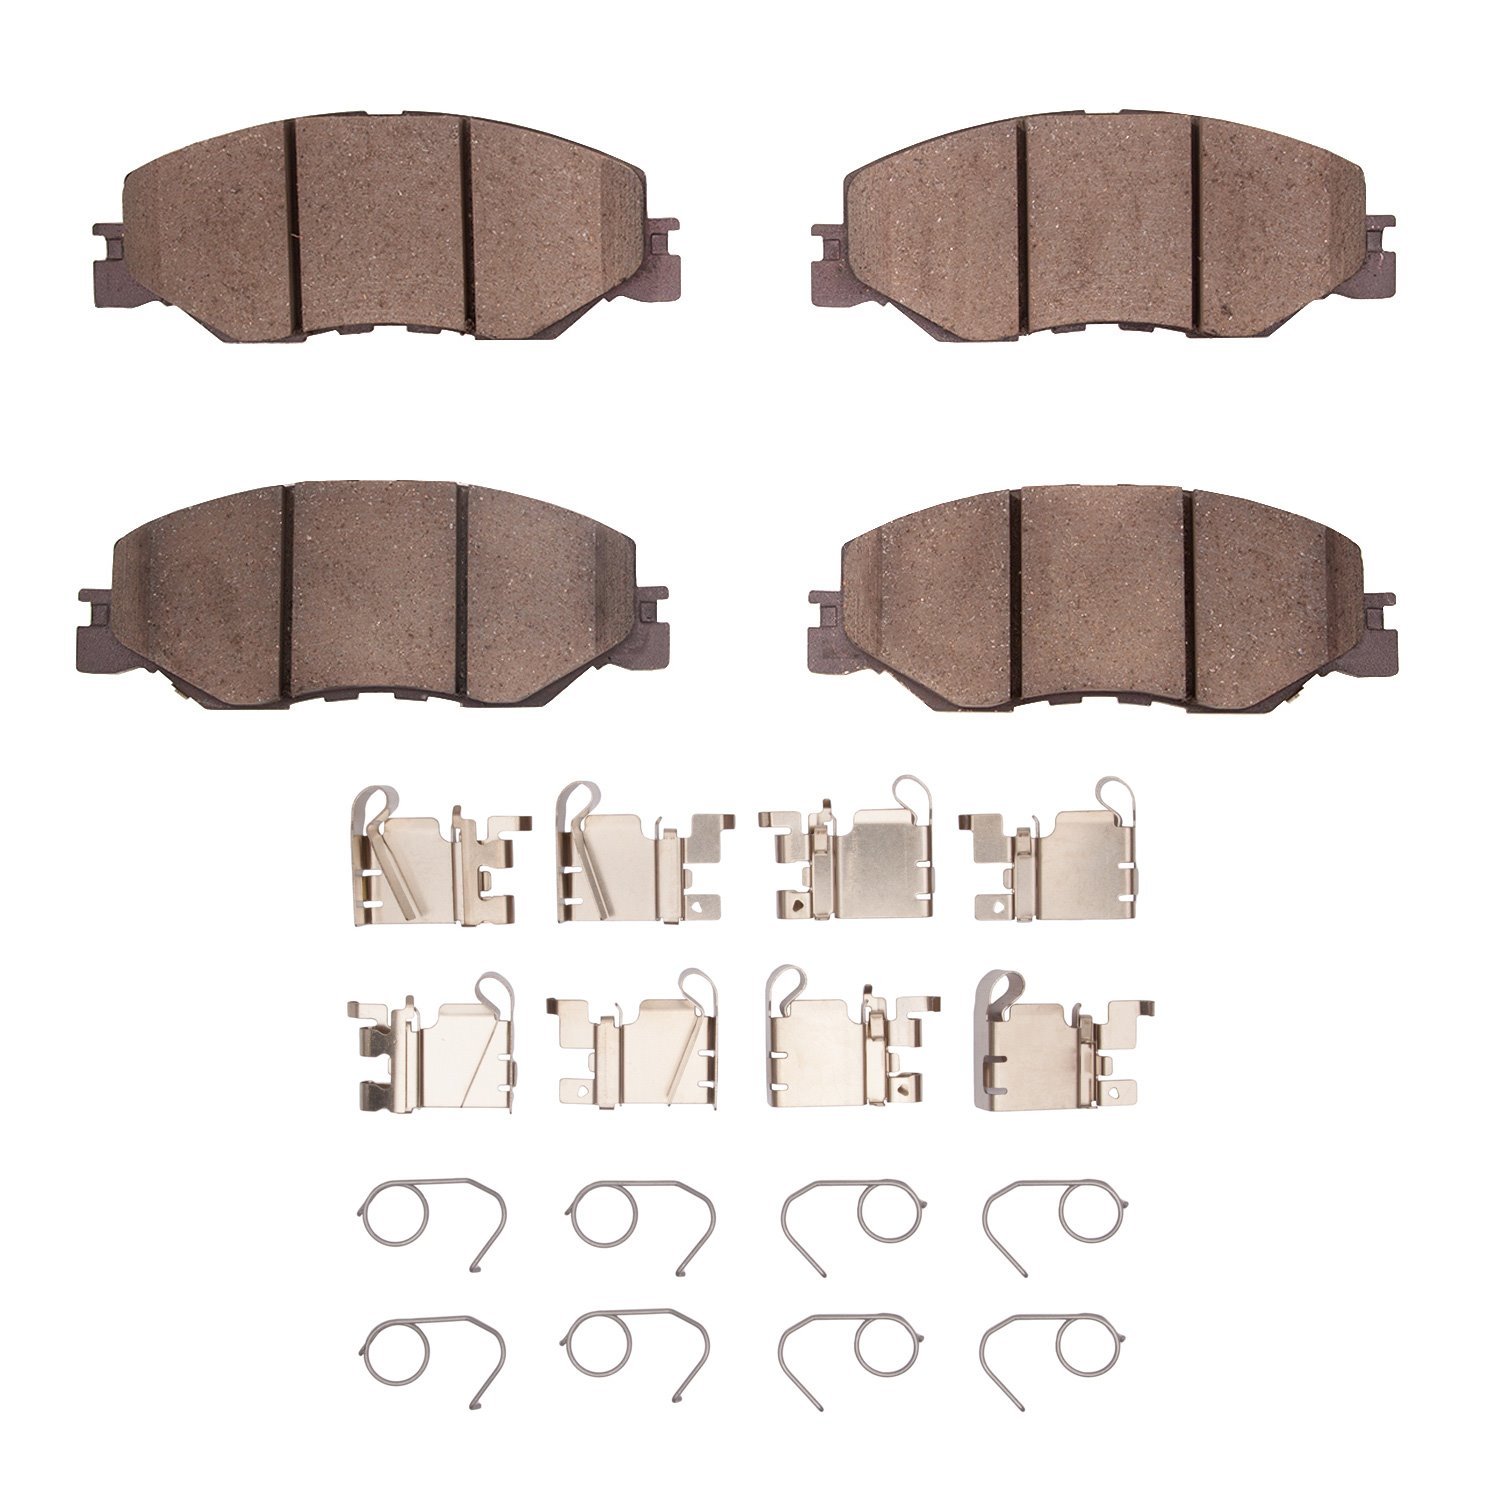 1310-2185-01 3000-Series Ceramic Brake Pads & Hardware Kit, Fits Select Acura/Honda, Position: Front